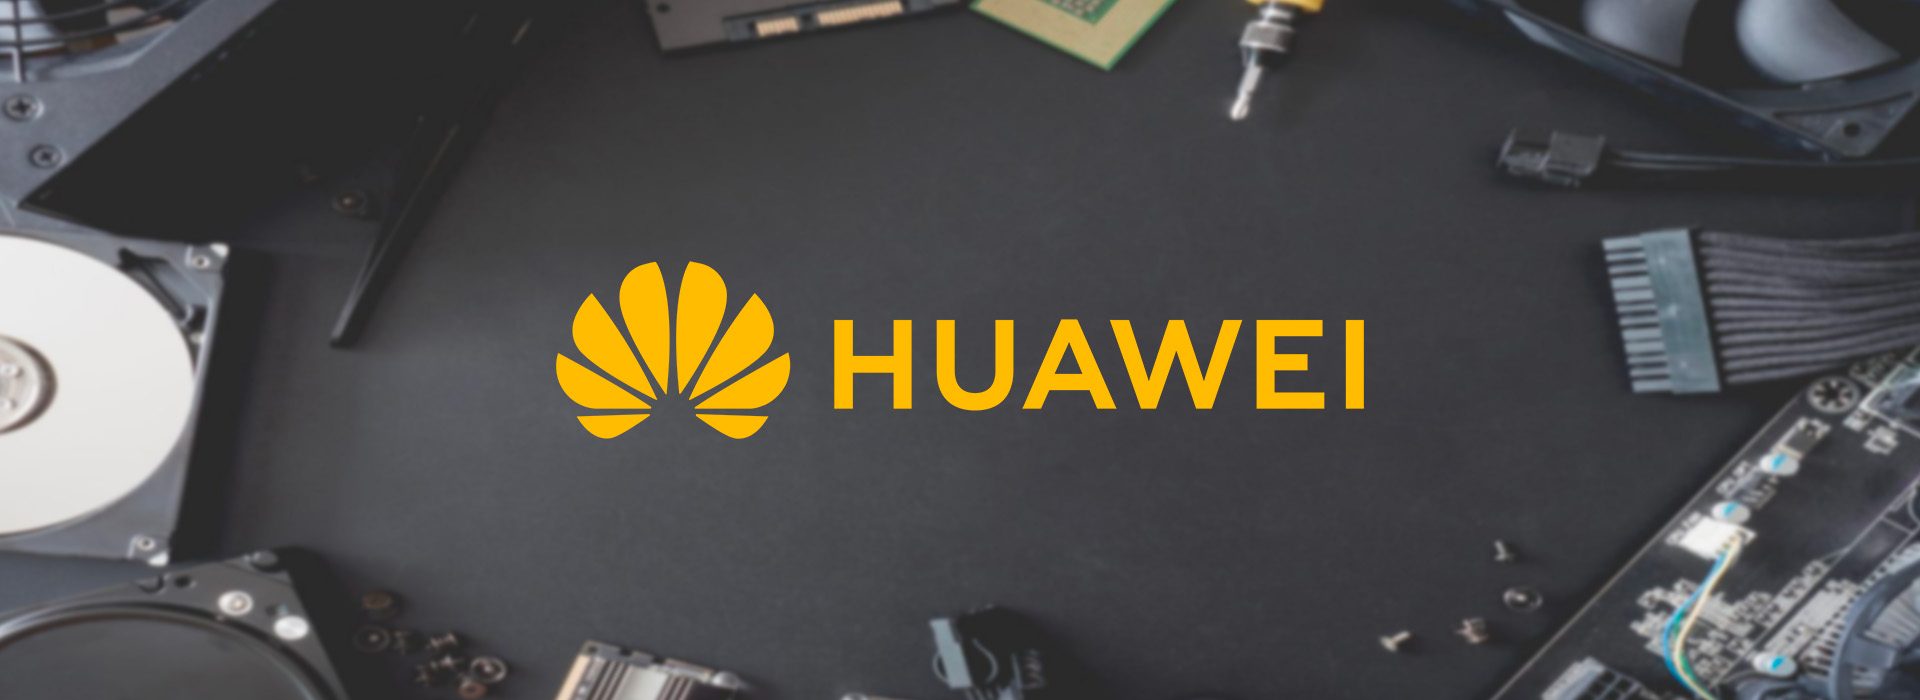 Huawei header 2